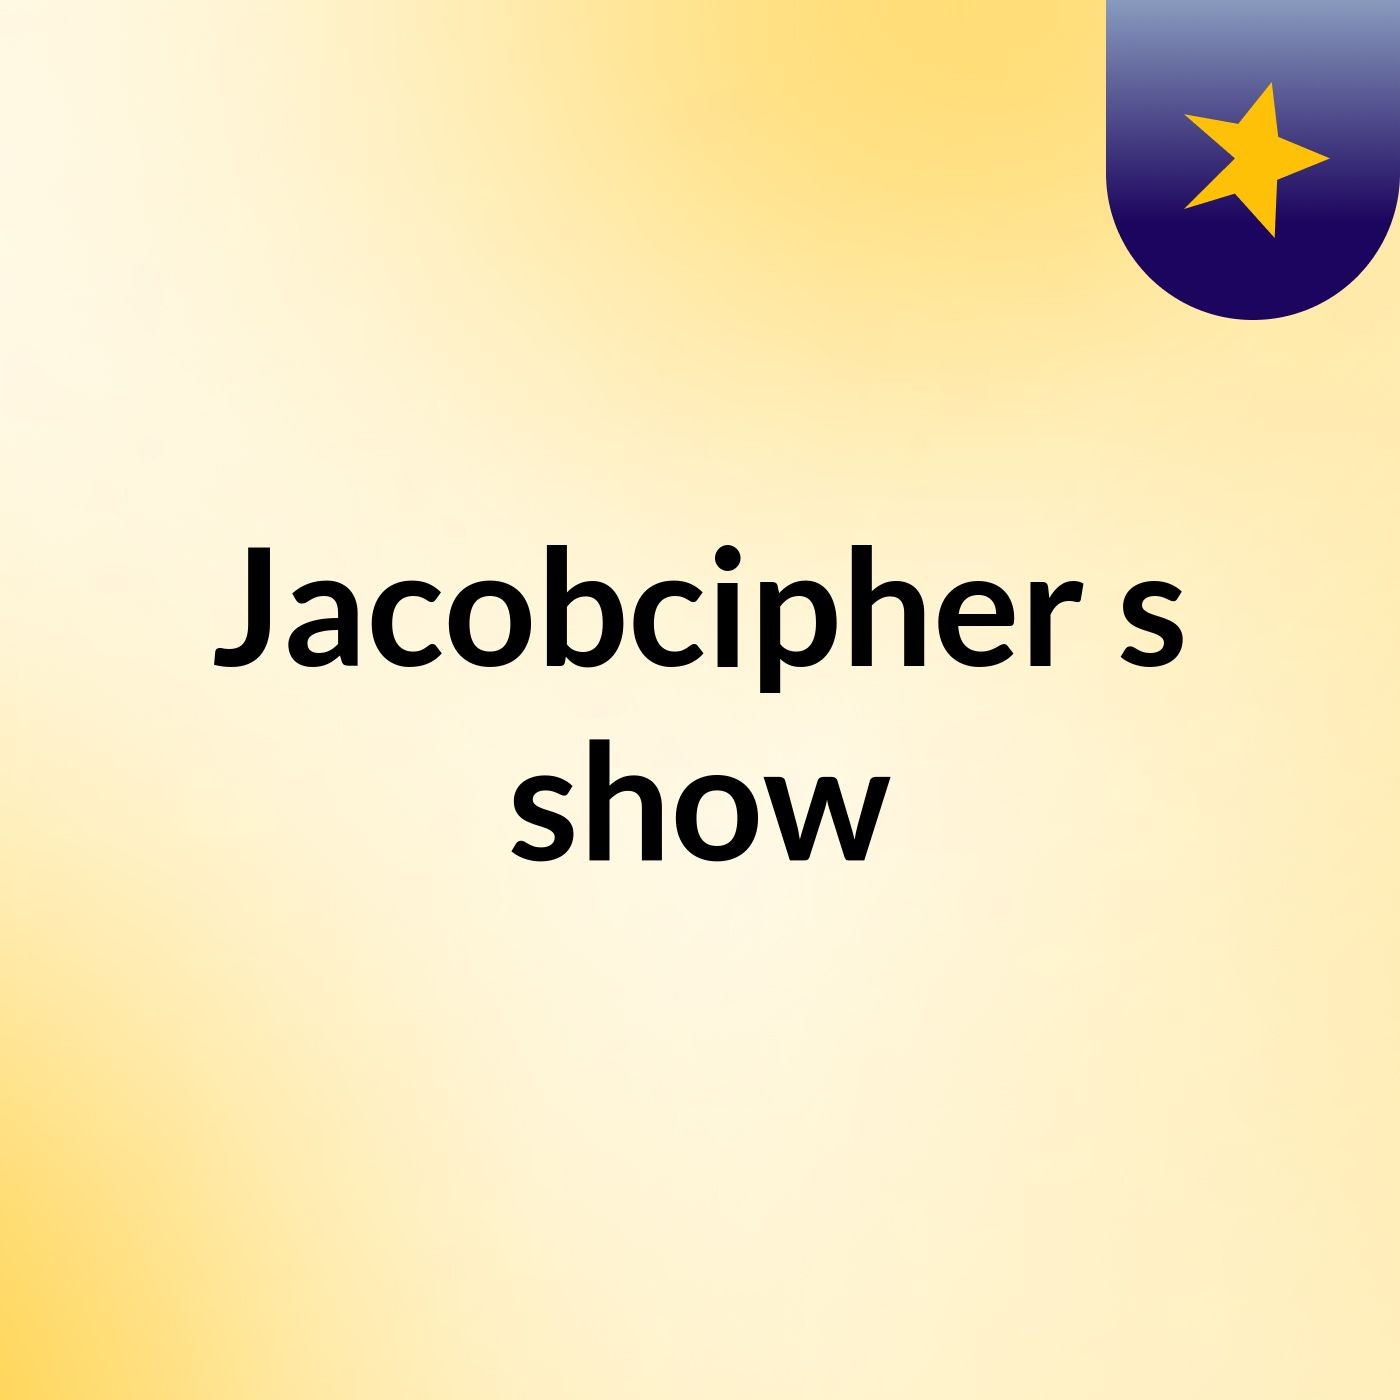 Jacobcipher's show